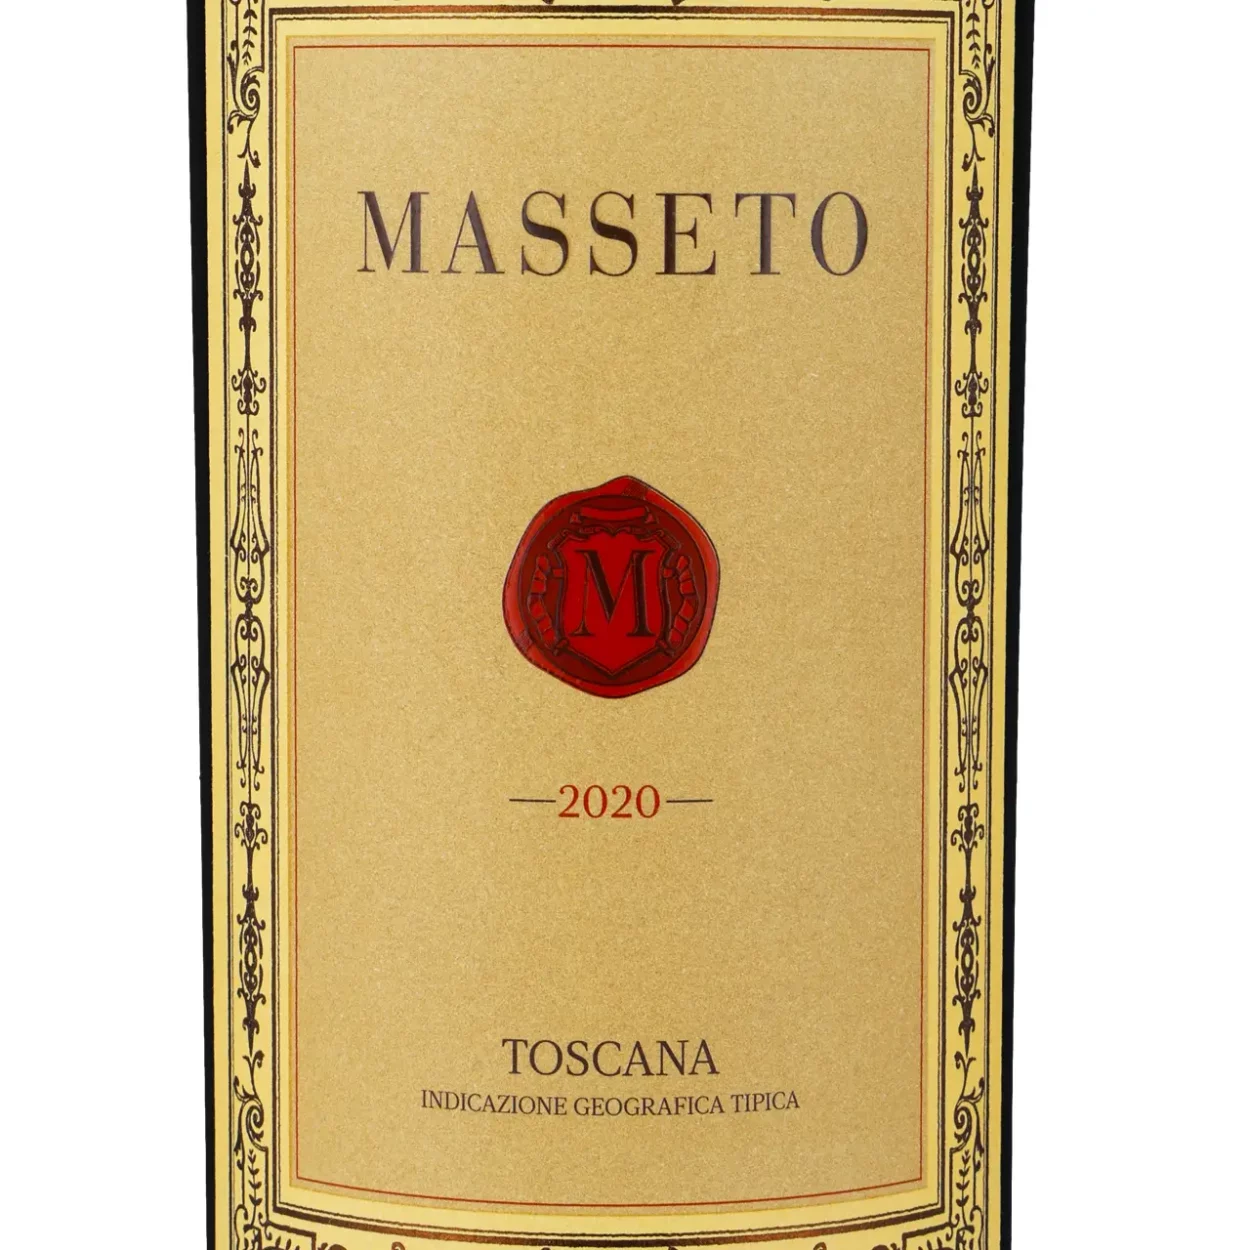 Masseto Toscana IGT 2020